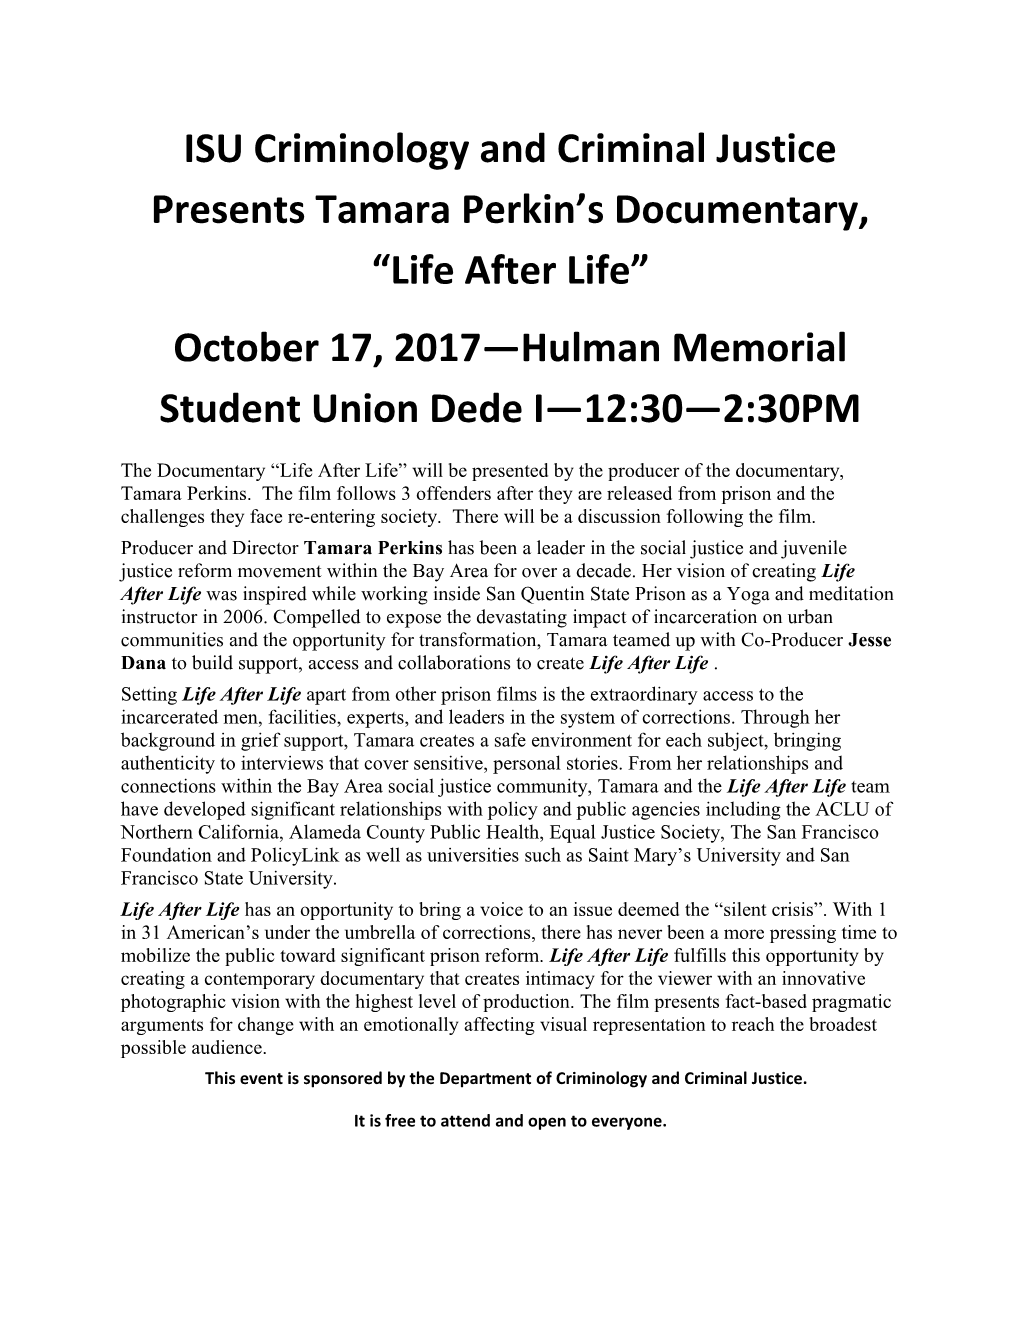 ISU Criminology and Criminal Justice Presents Tamara Perkin S Documentary, Life After Life